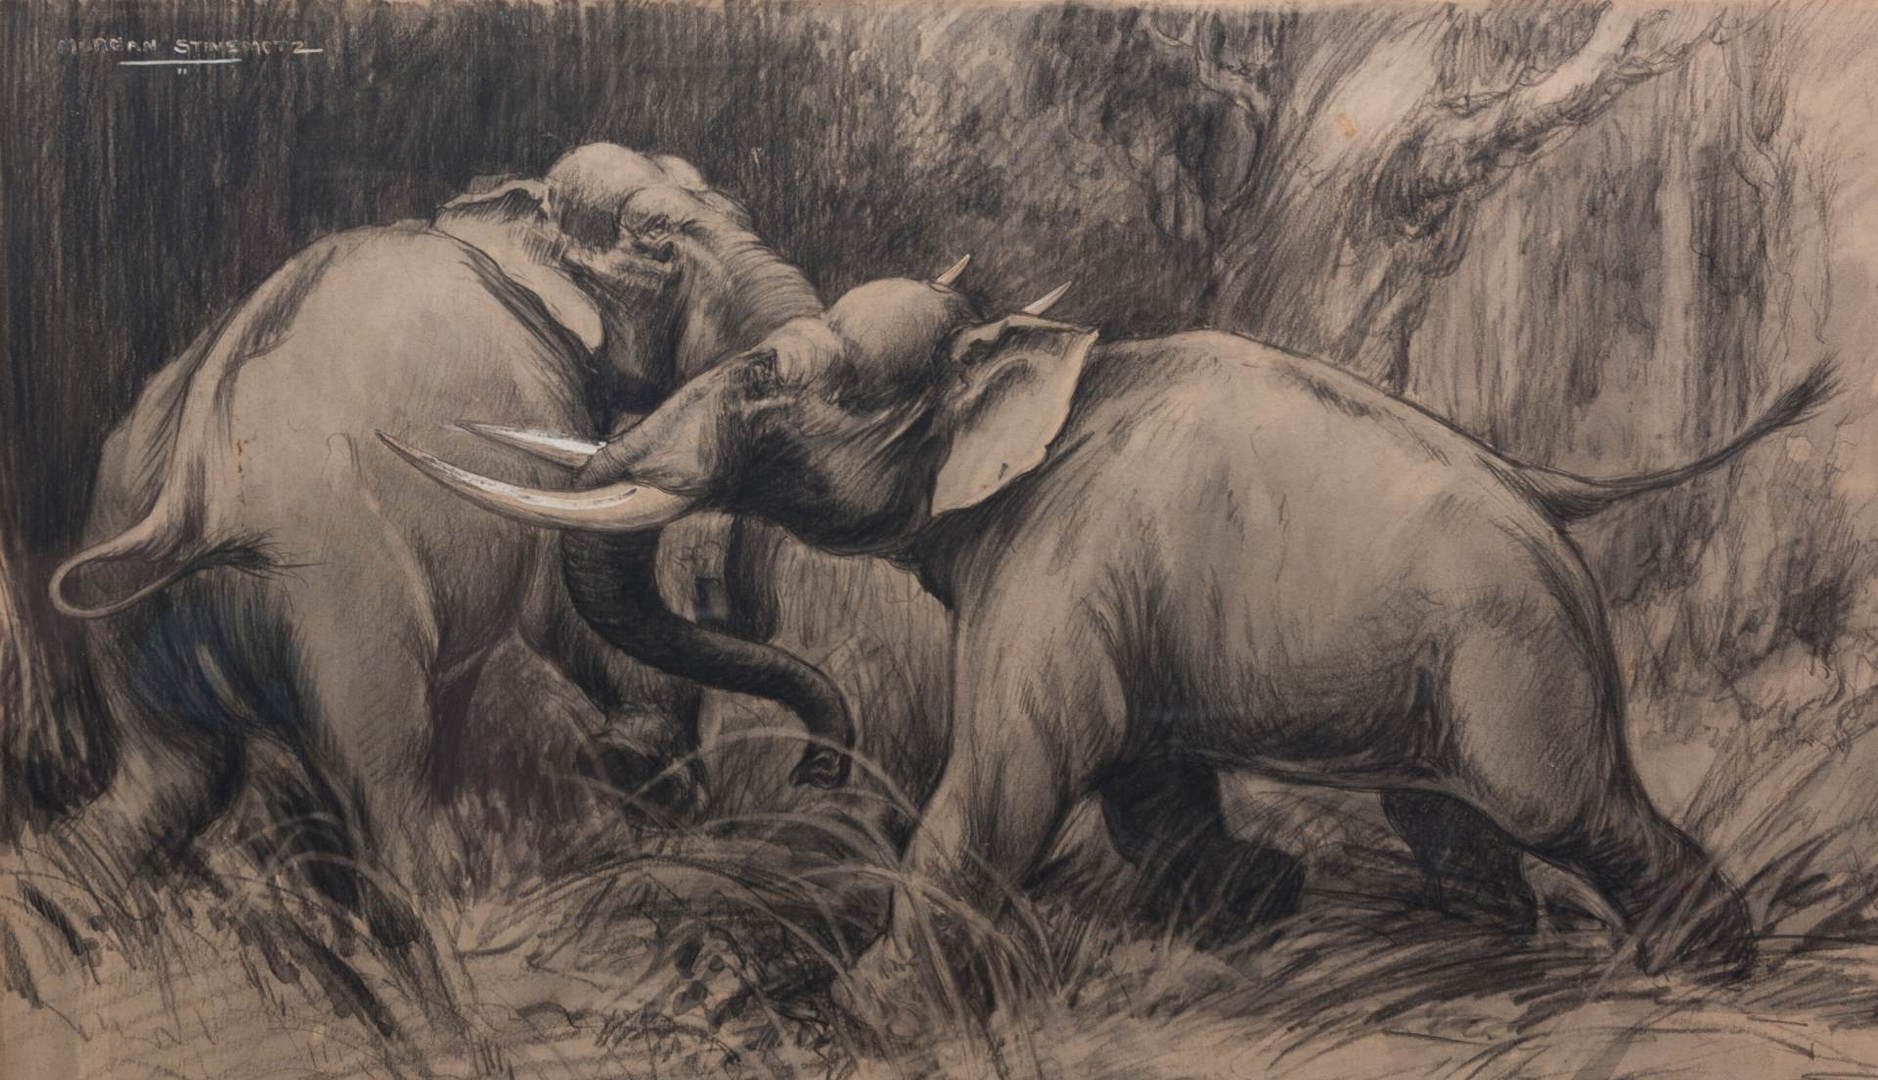 Lot 610: 2 Morgan Stinemetz drawings, ostrich and elephants